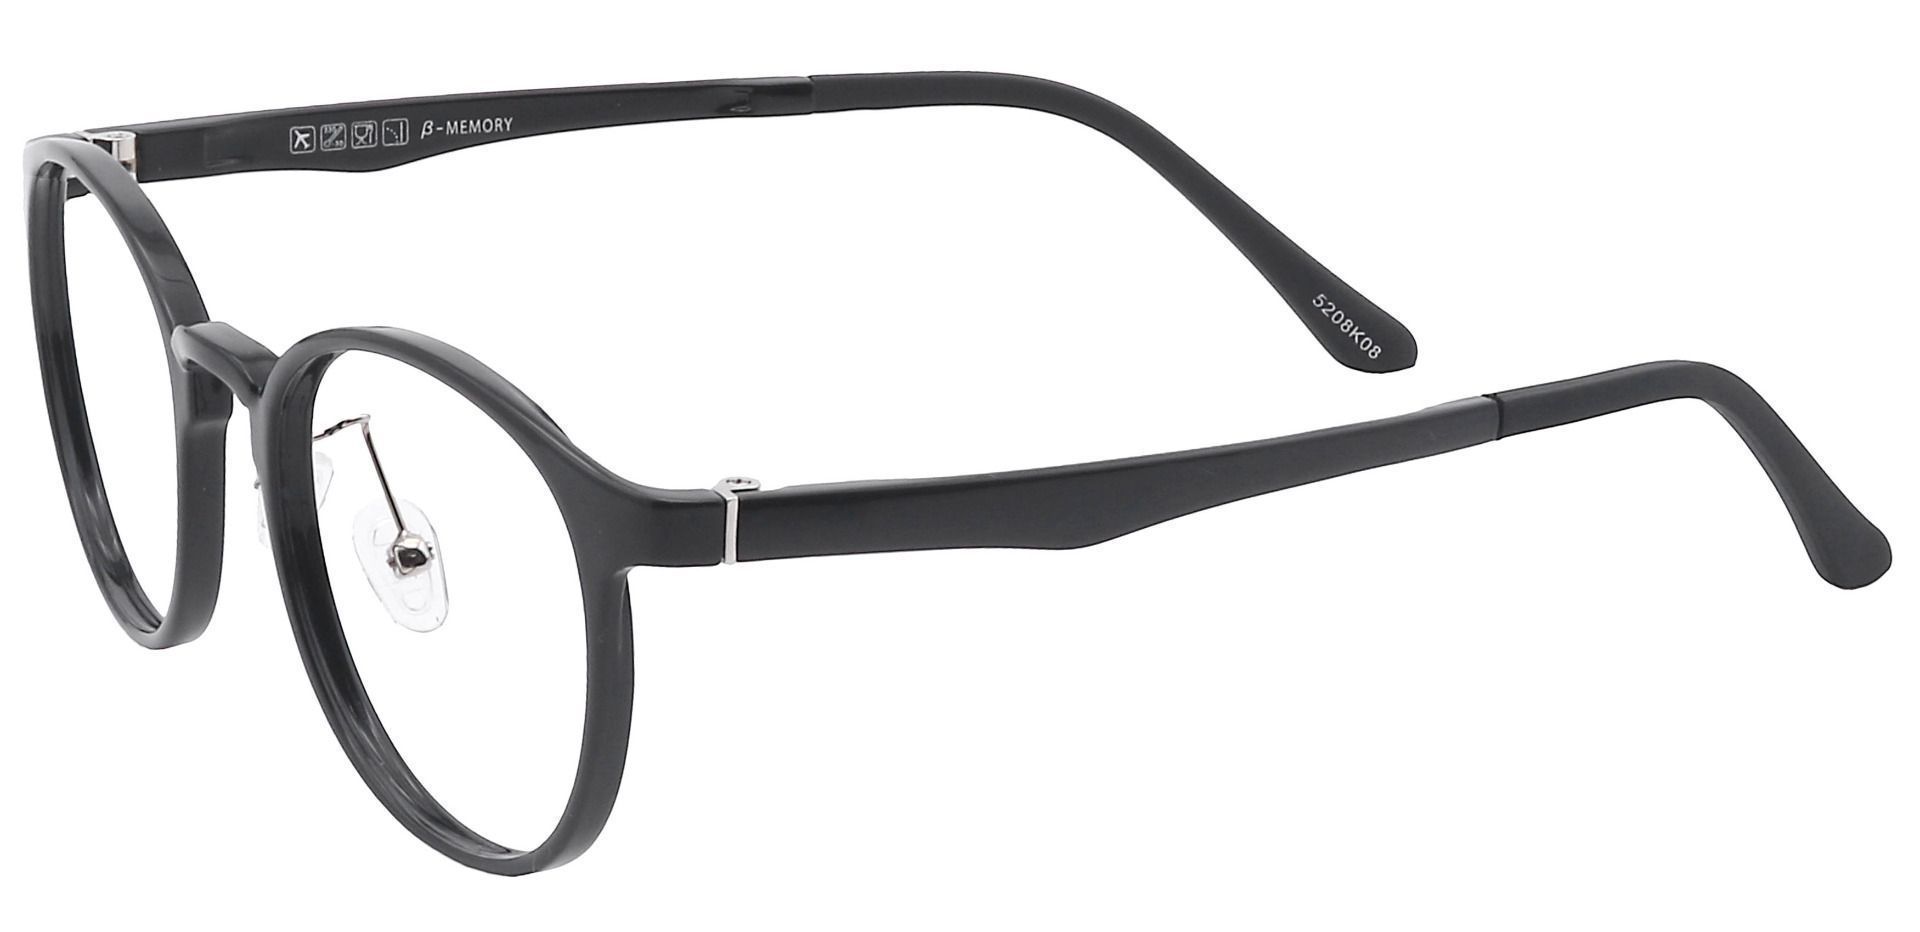 Nimbus Oval Progressive Glasses - Black